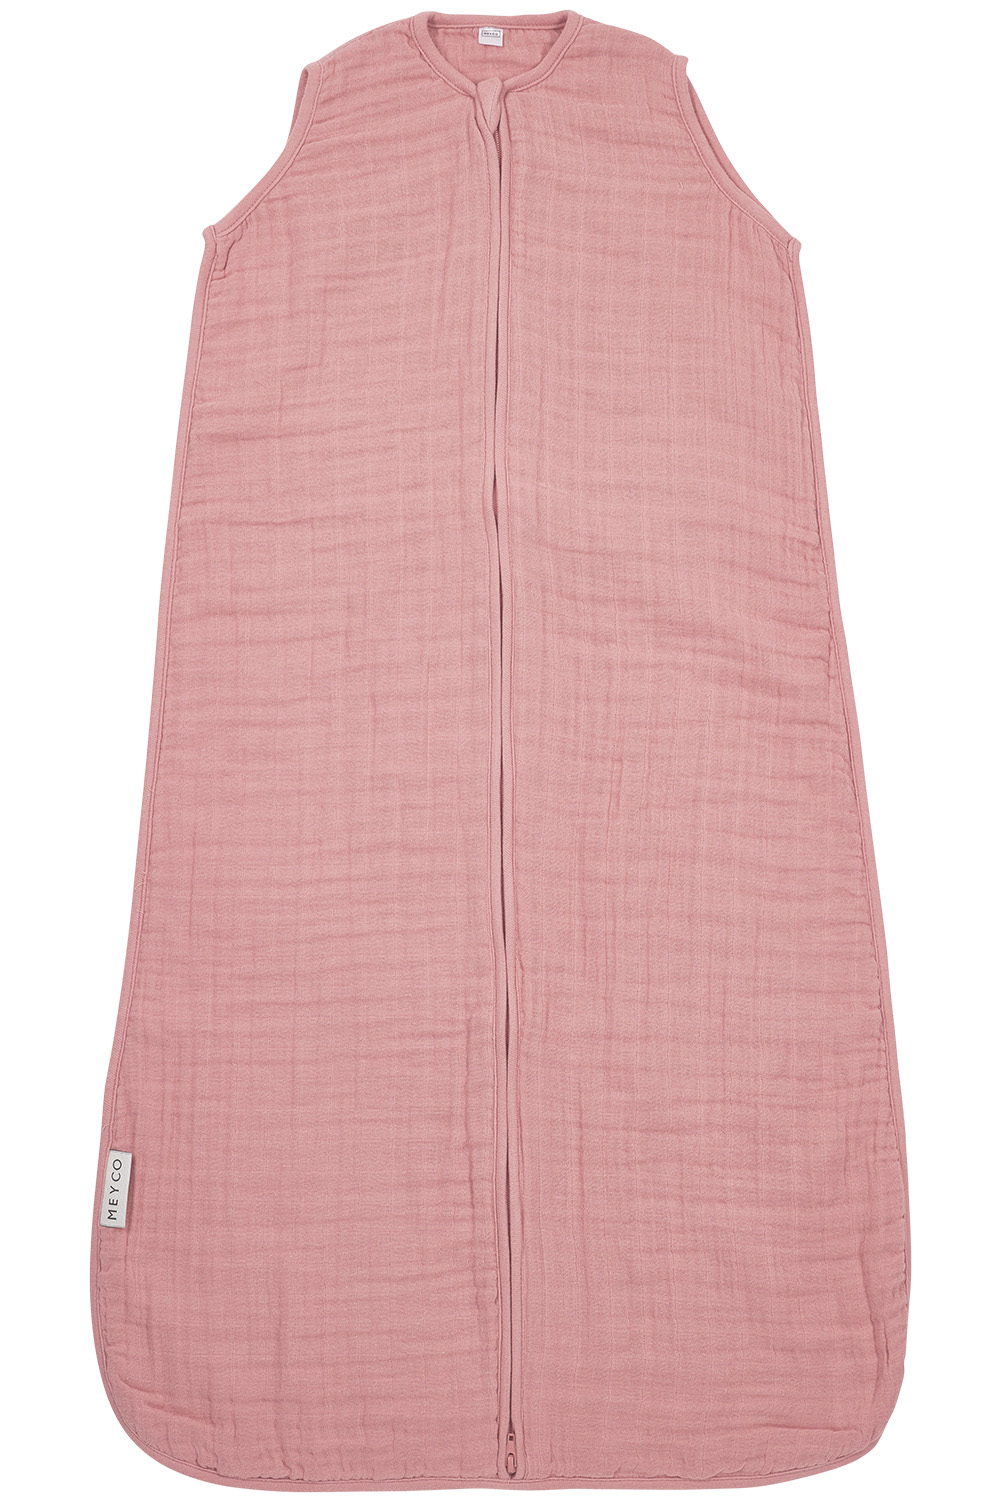 Sleepingbag pre-washed muslin Uni - old pink - 70cm